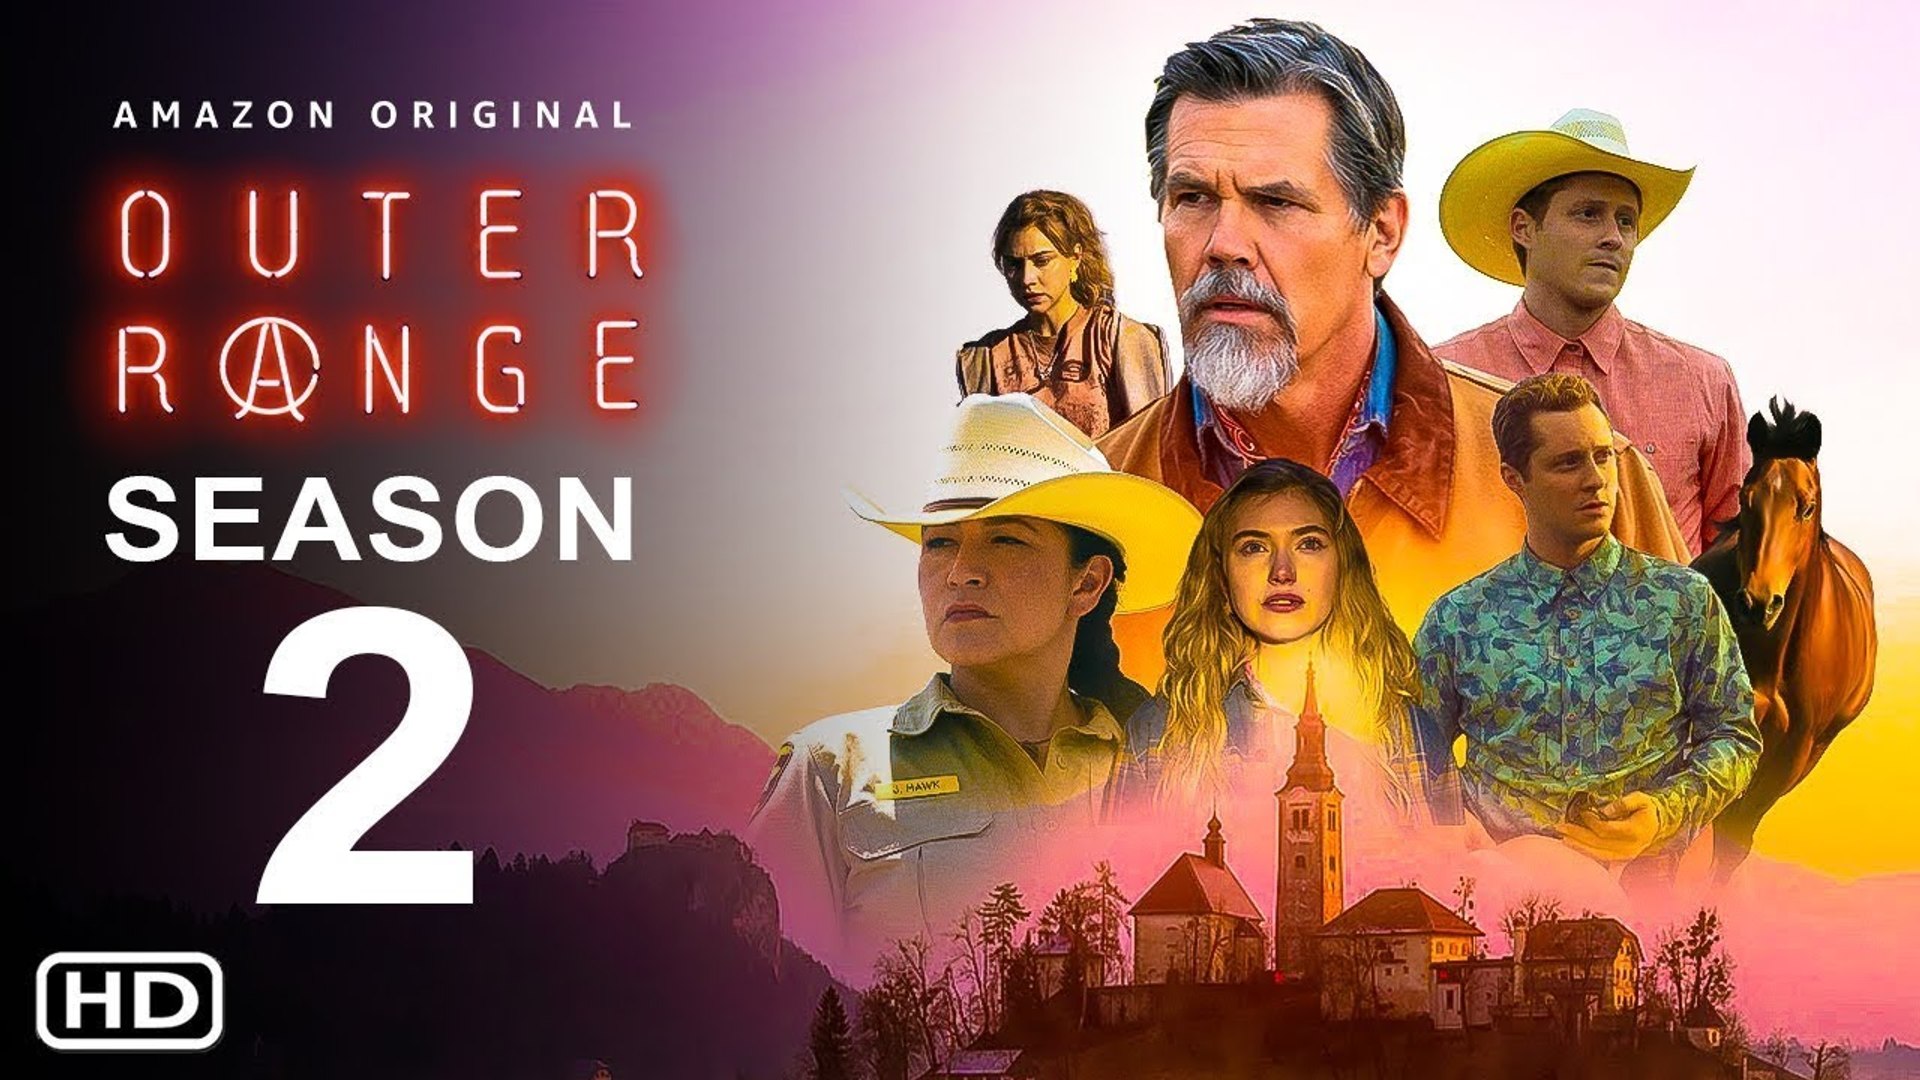 Outer Range Season 2 Trailer - Amazon Prime Video - video Dailymotion